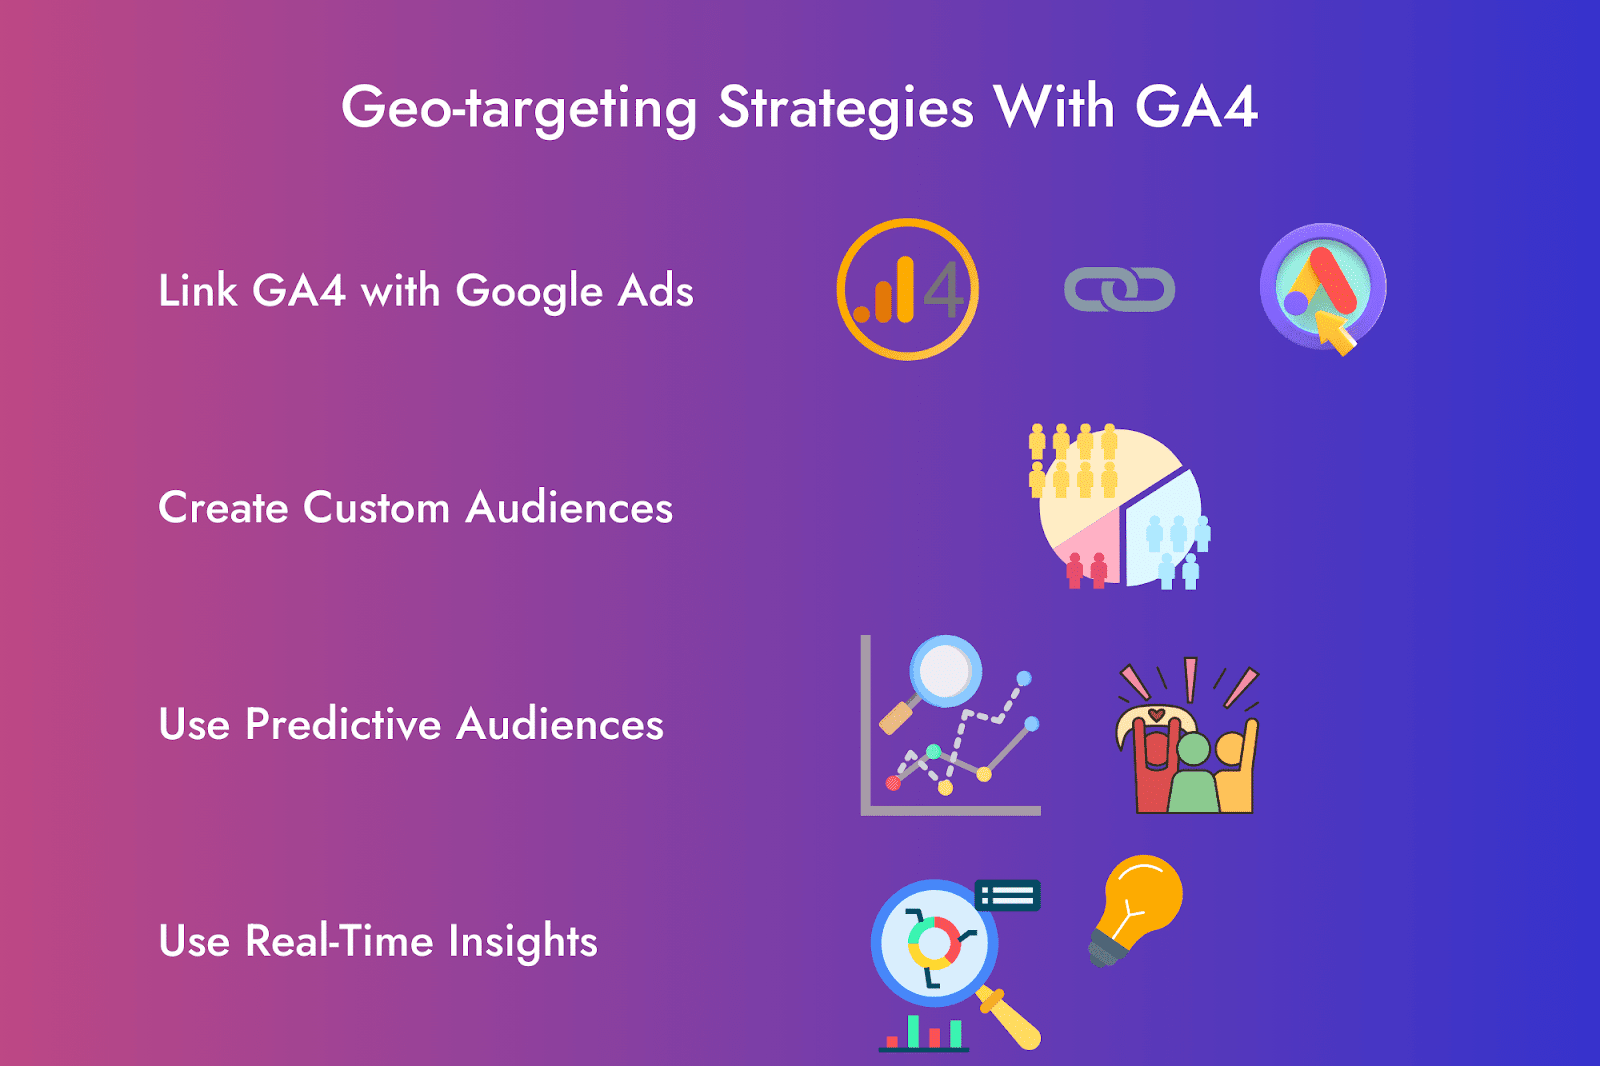 Benefits of Using GA4 for Geo-targeting startegies